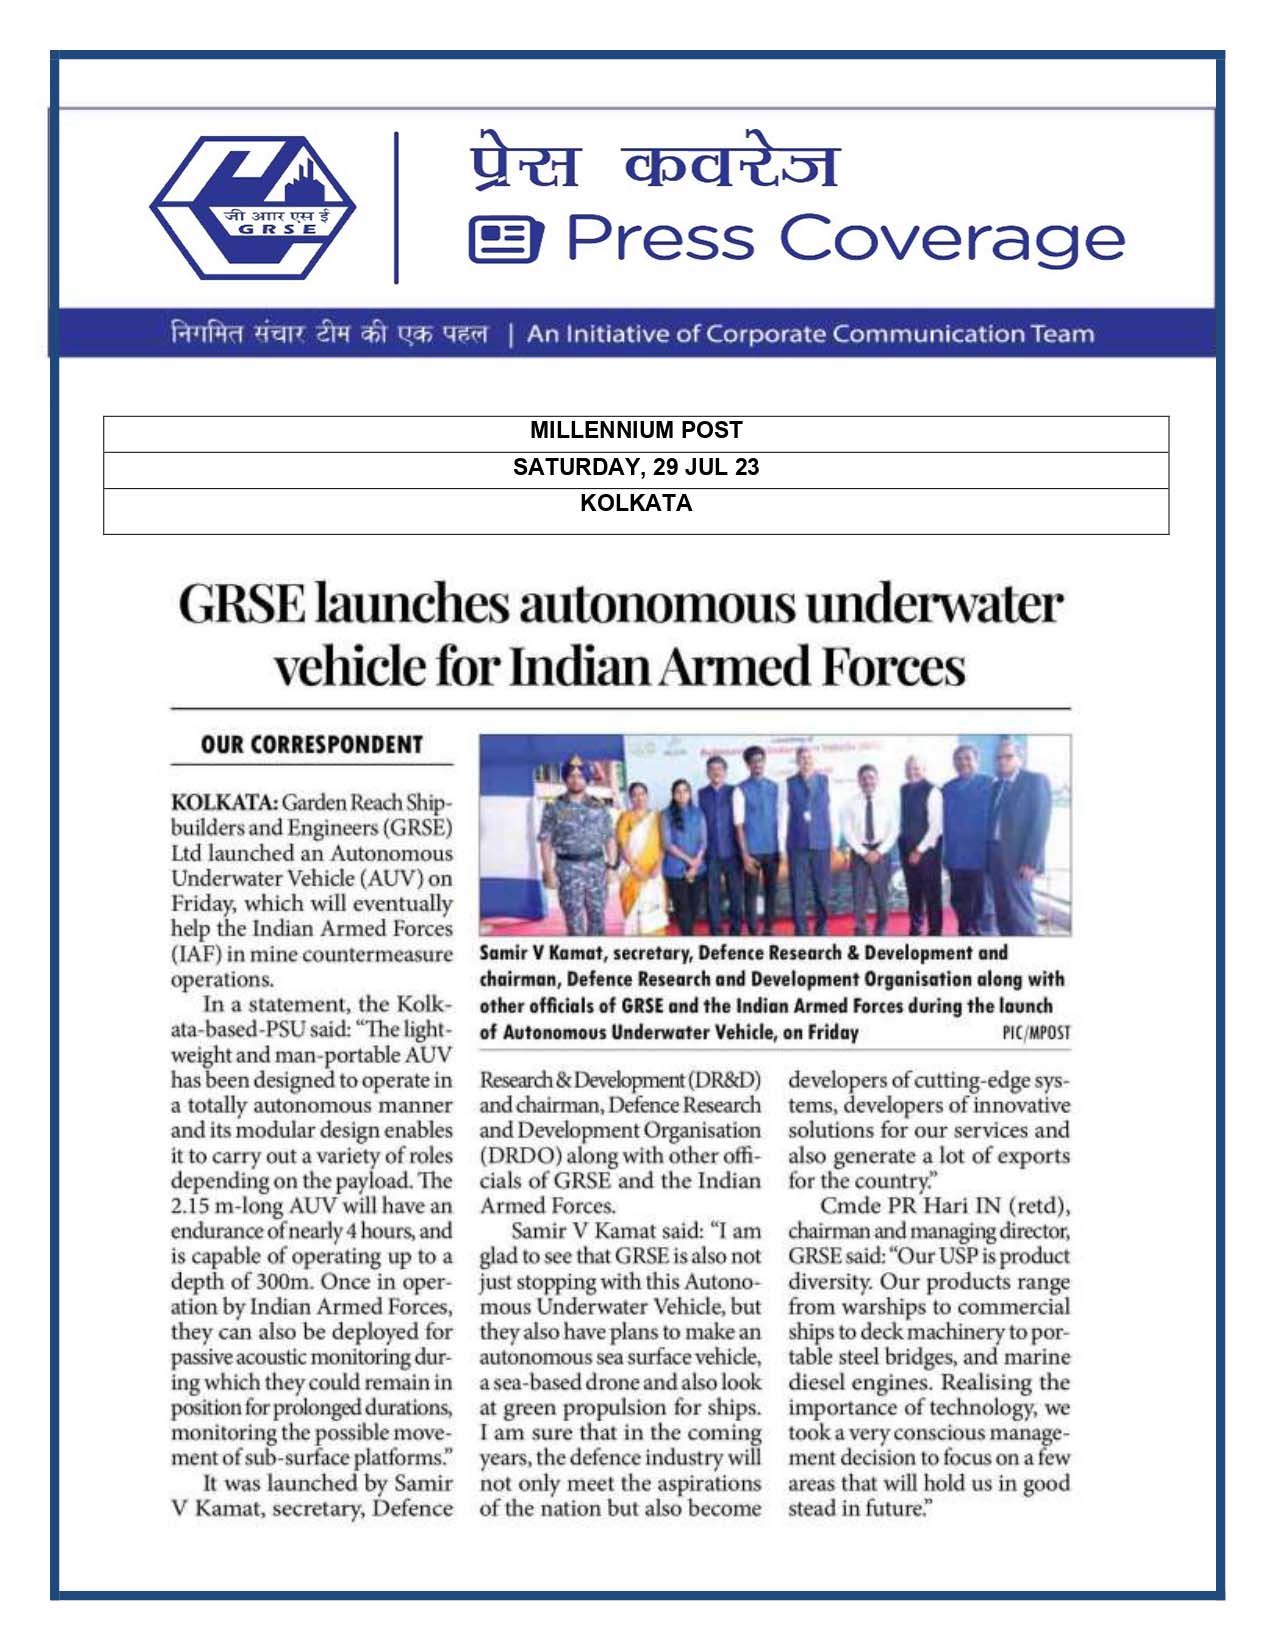 Press Coverage : Millenium Post, 29 Jul 23 : GRSE Launches Autonomous Underwater Vehicle for Indian Armed Forces